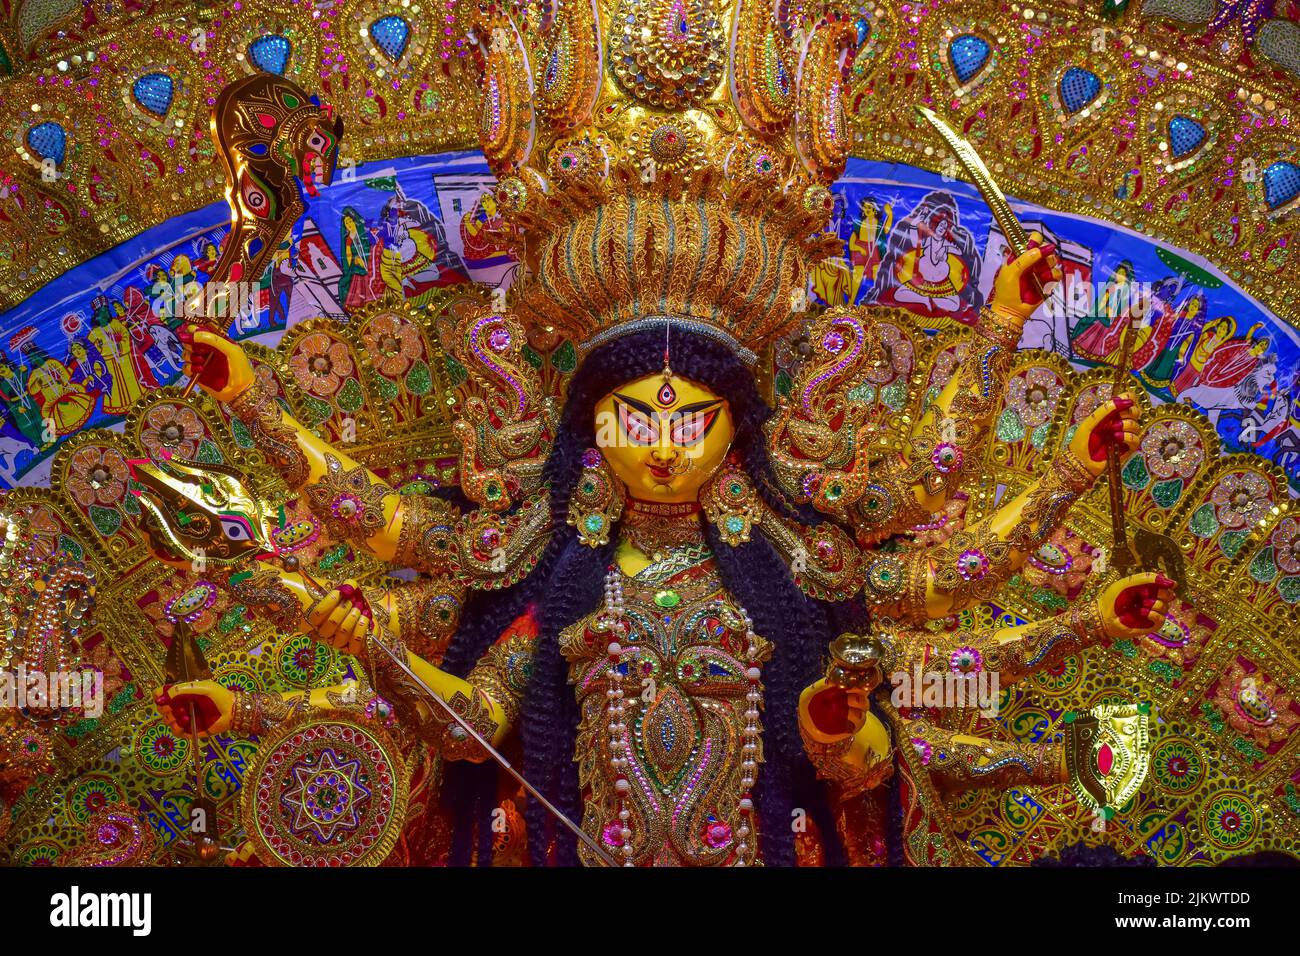 The Goddess Durga statue during the Durga Puja festival in India Stock Photo